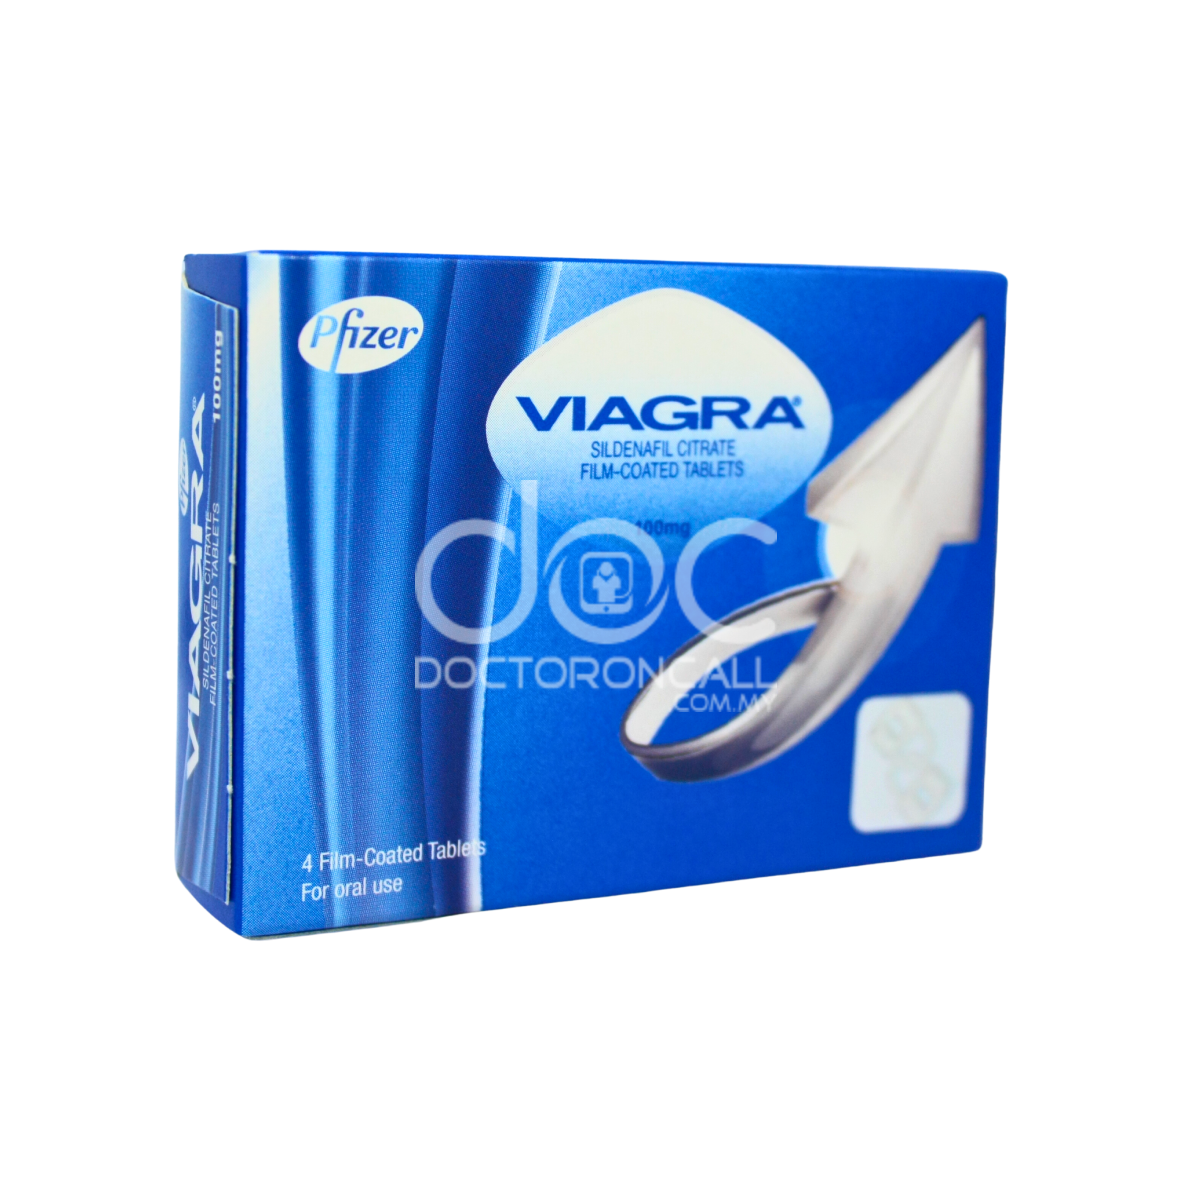 Viagra 100mg Tablet 4s - DoctorOnCall Farmasi Online